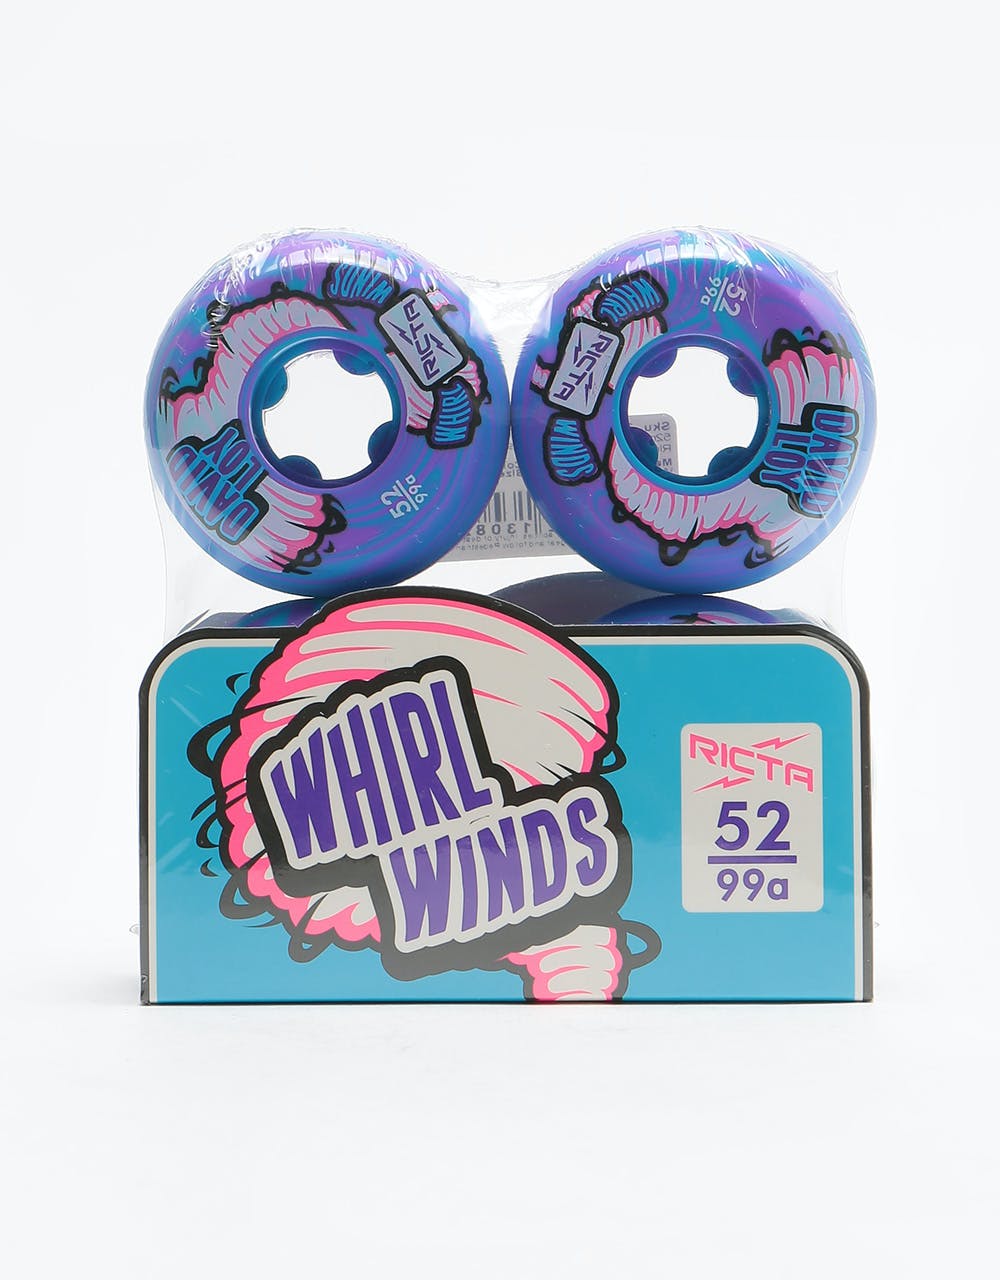 Ricta Loy Whirlwinds Swirl 99a Skateboard Wheel - 52mm